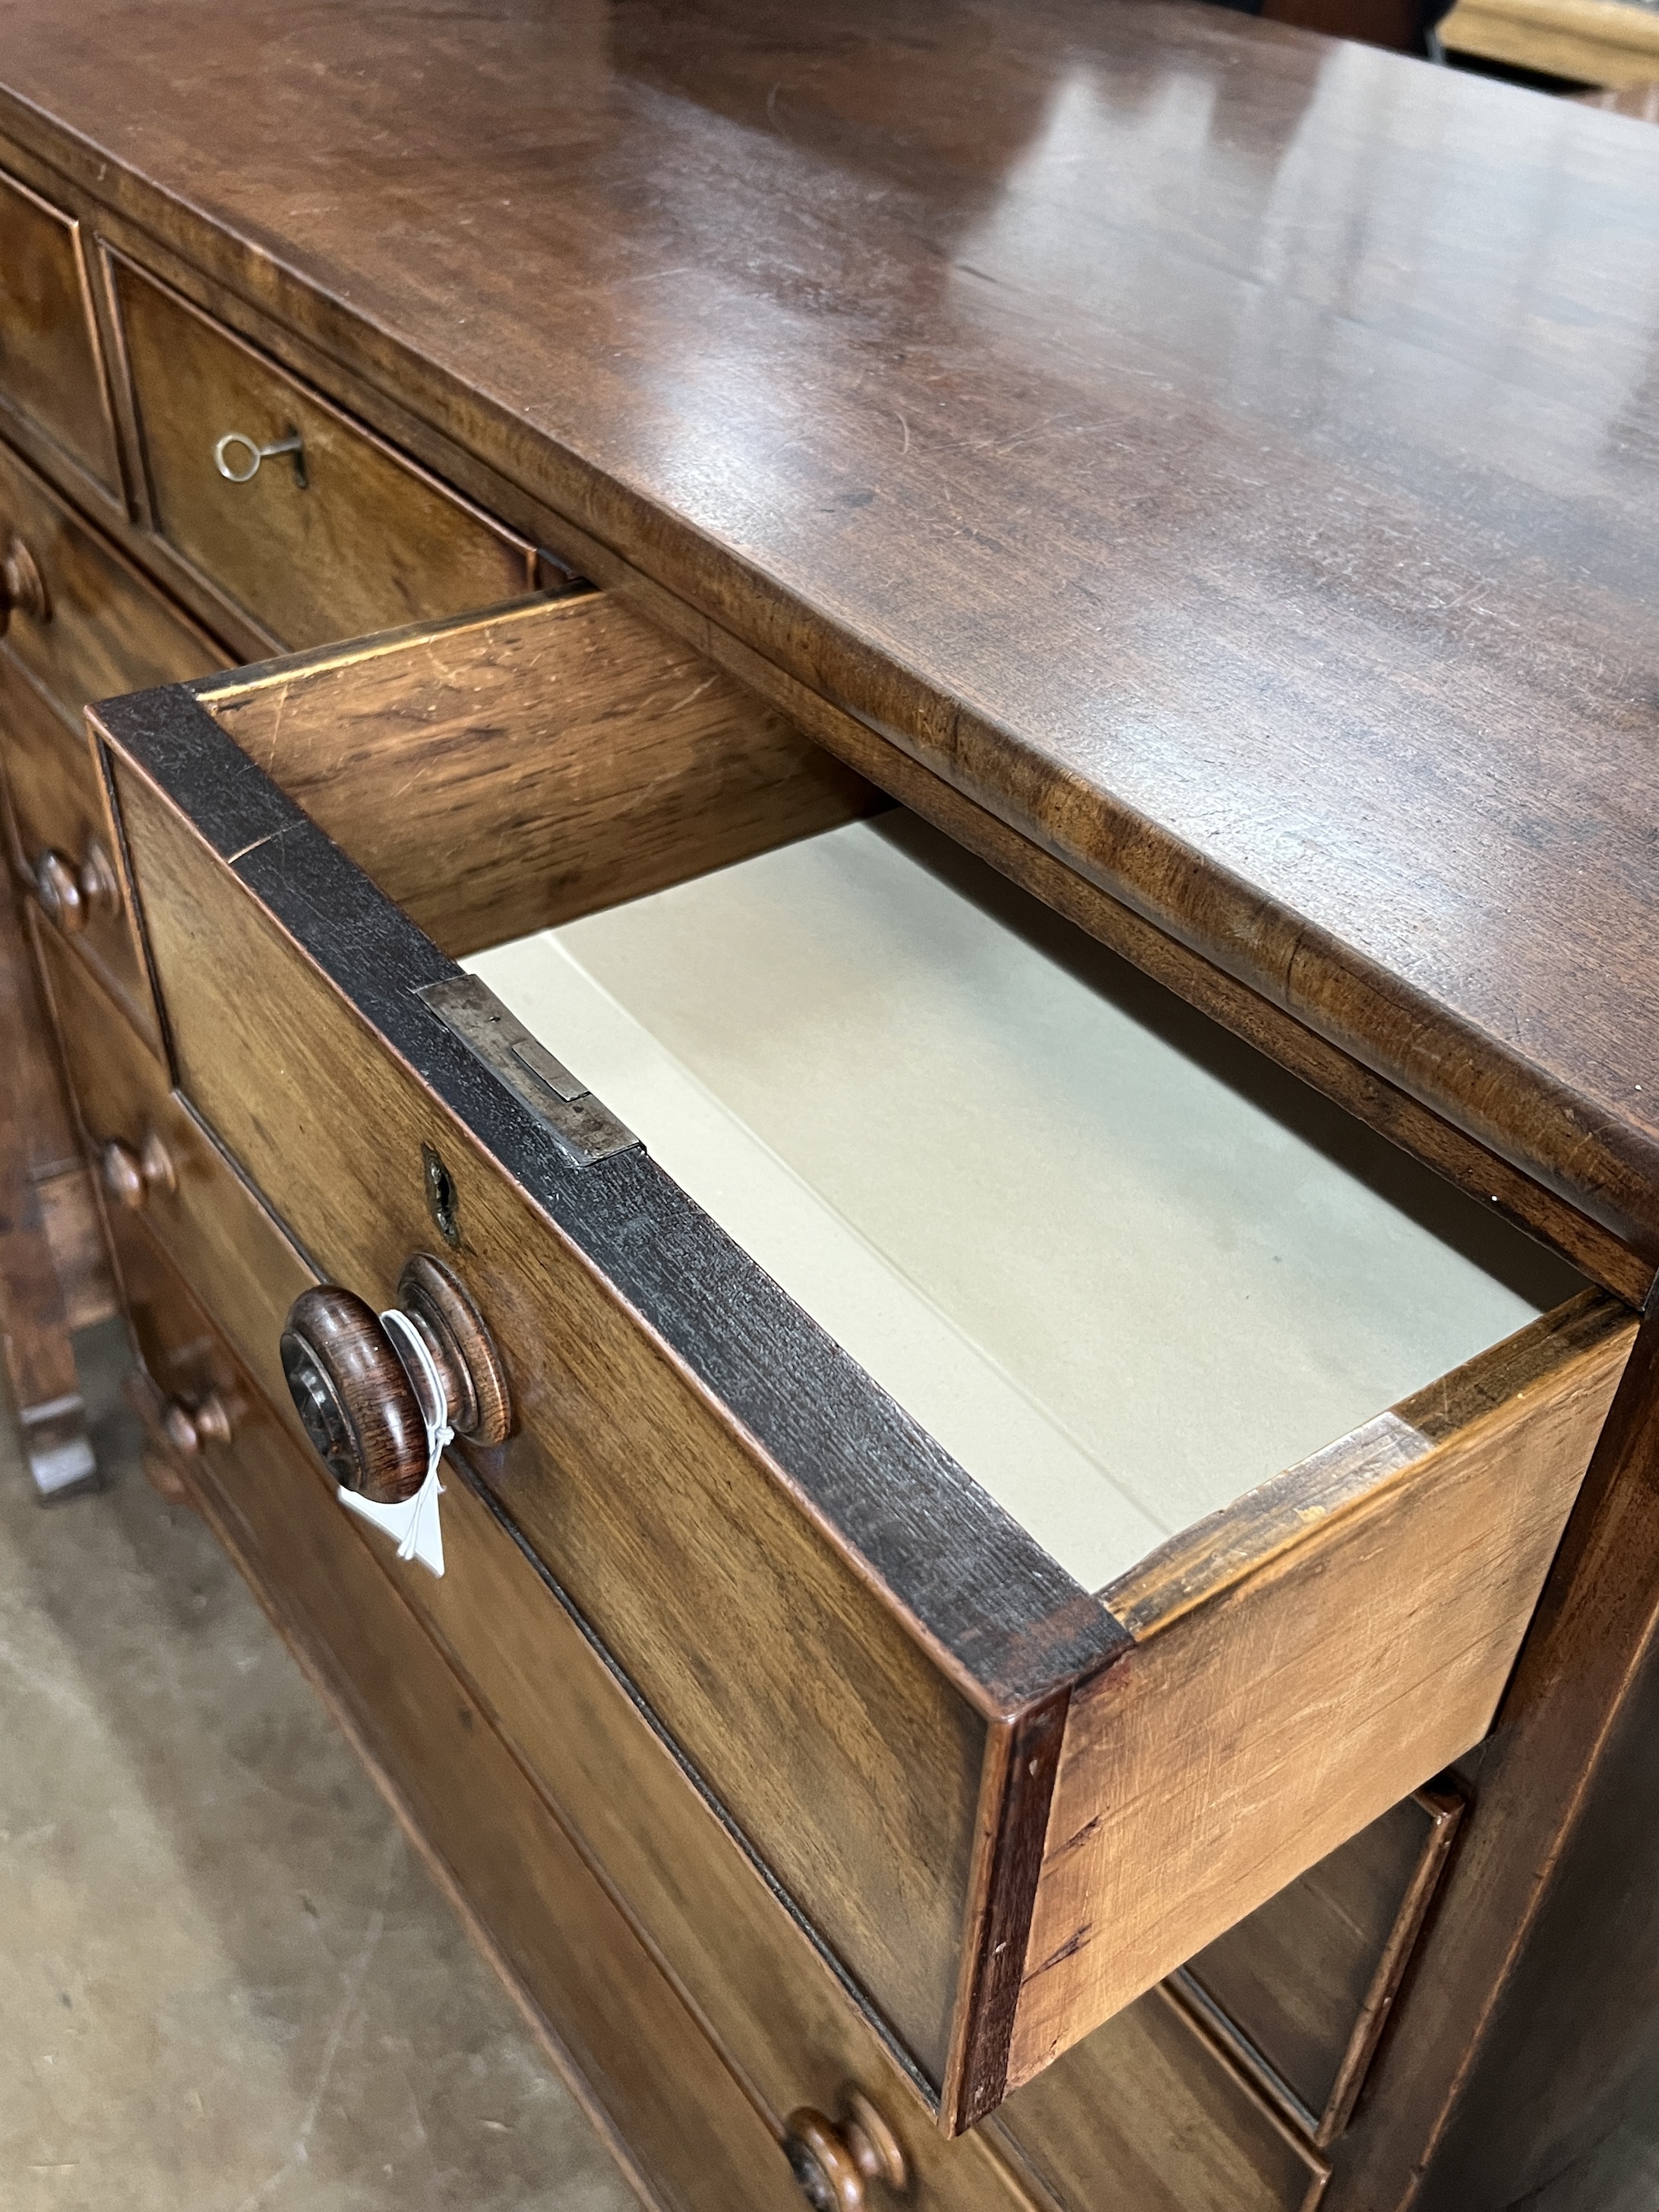 A George IV mahogany seven drawer chest, width 119cm, depth 56cm, height 119cm